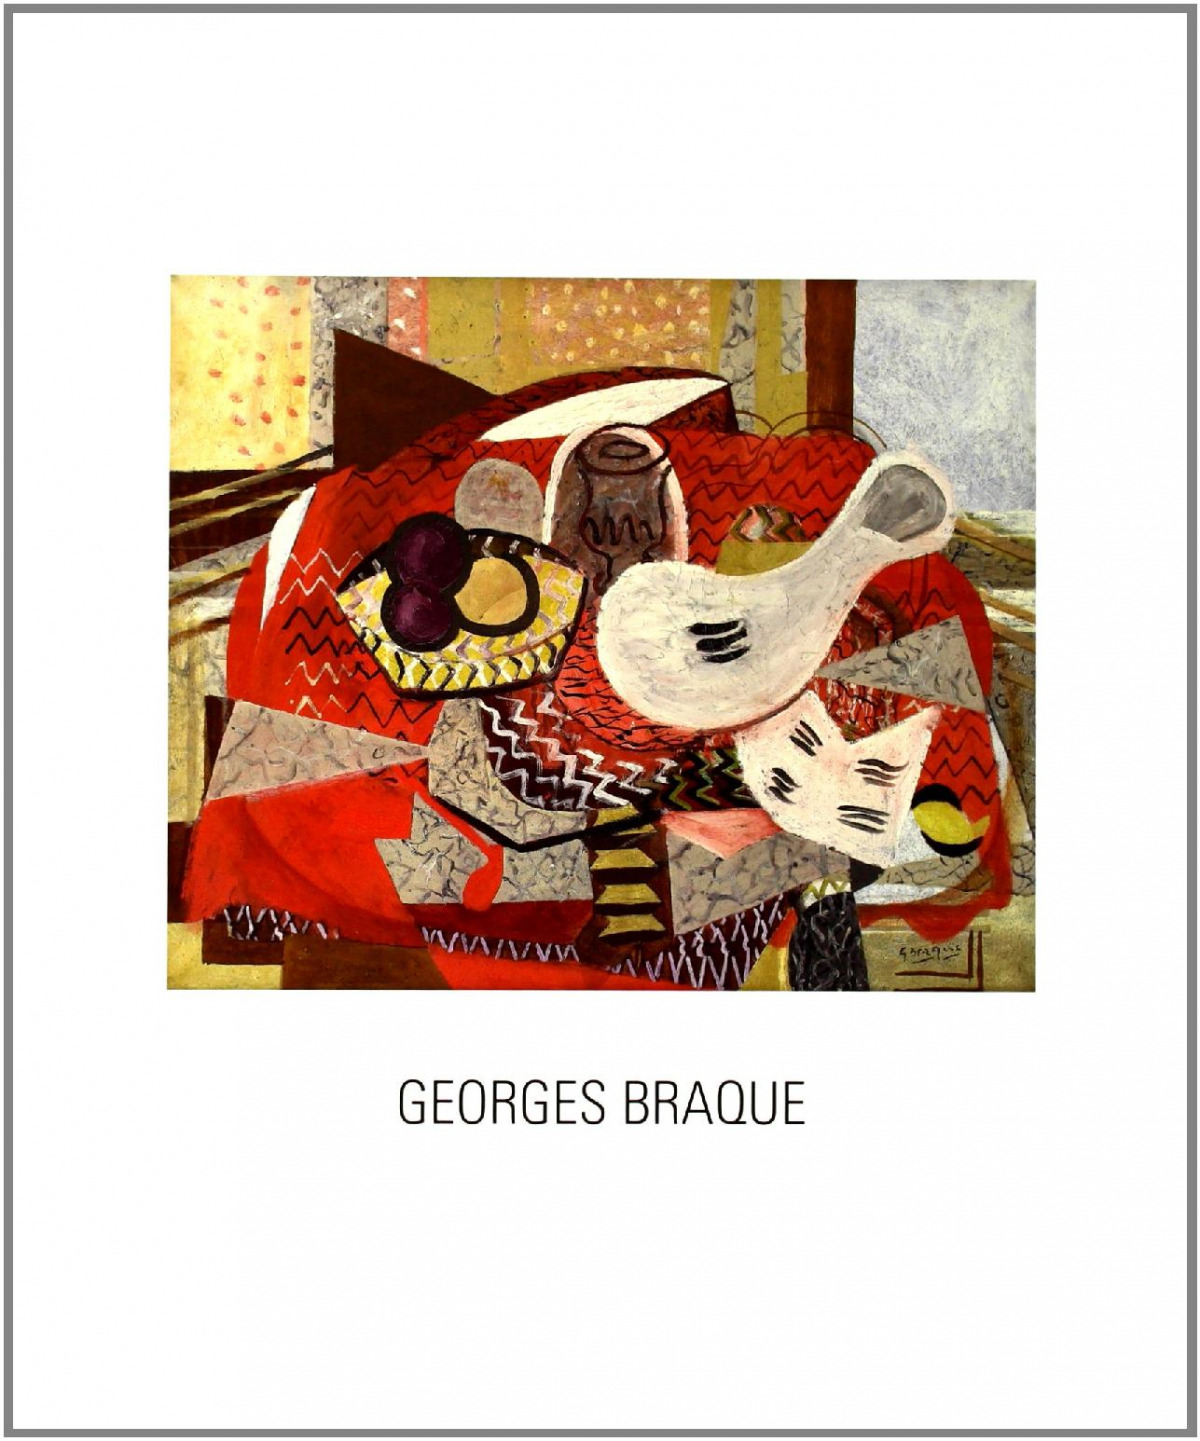 Georges braque - Georges Braque